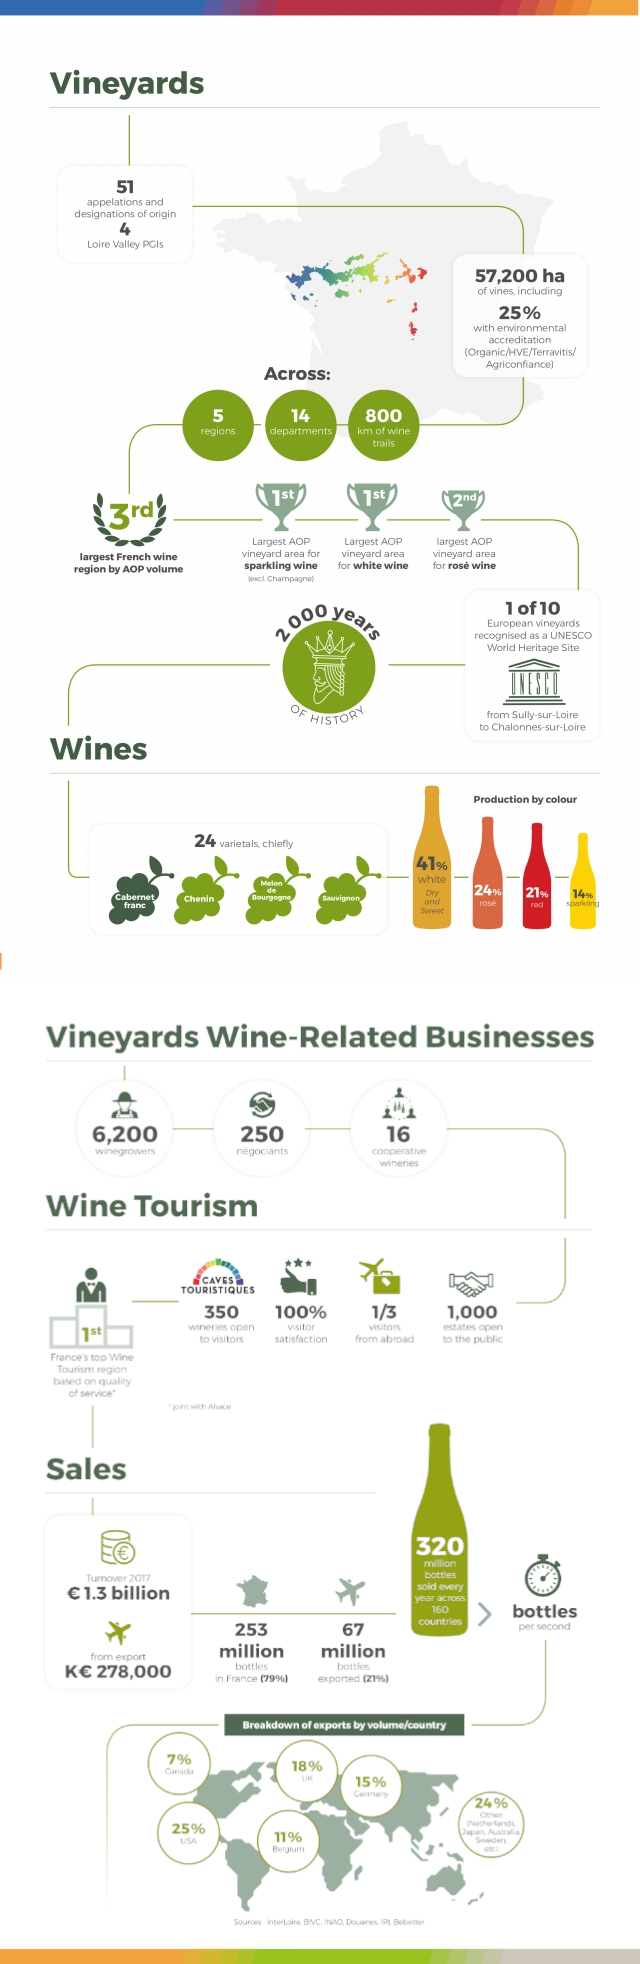 Loire Valley Wines Key Figures